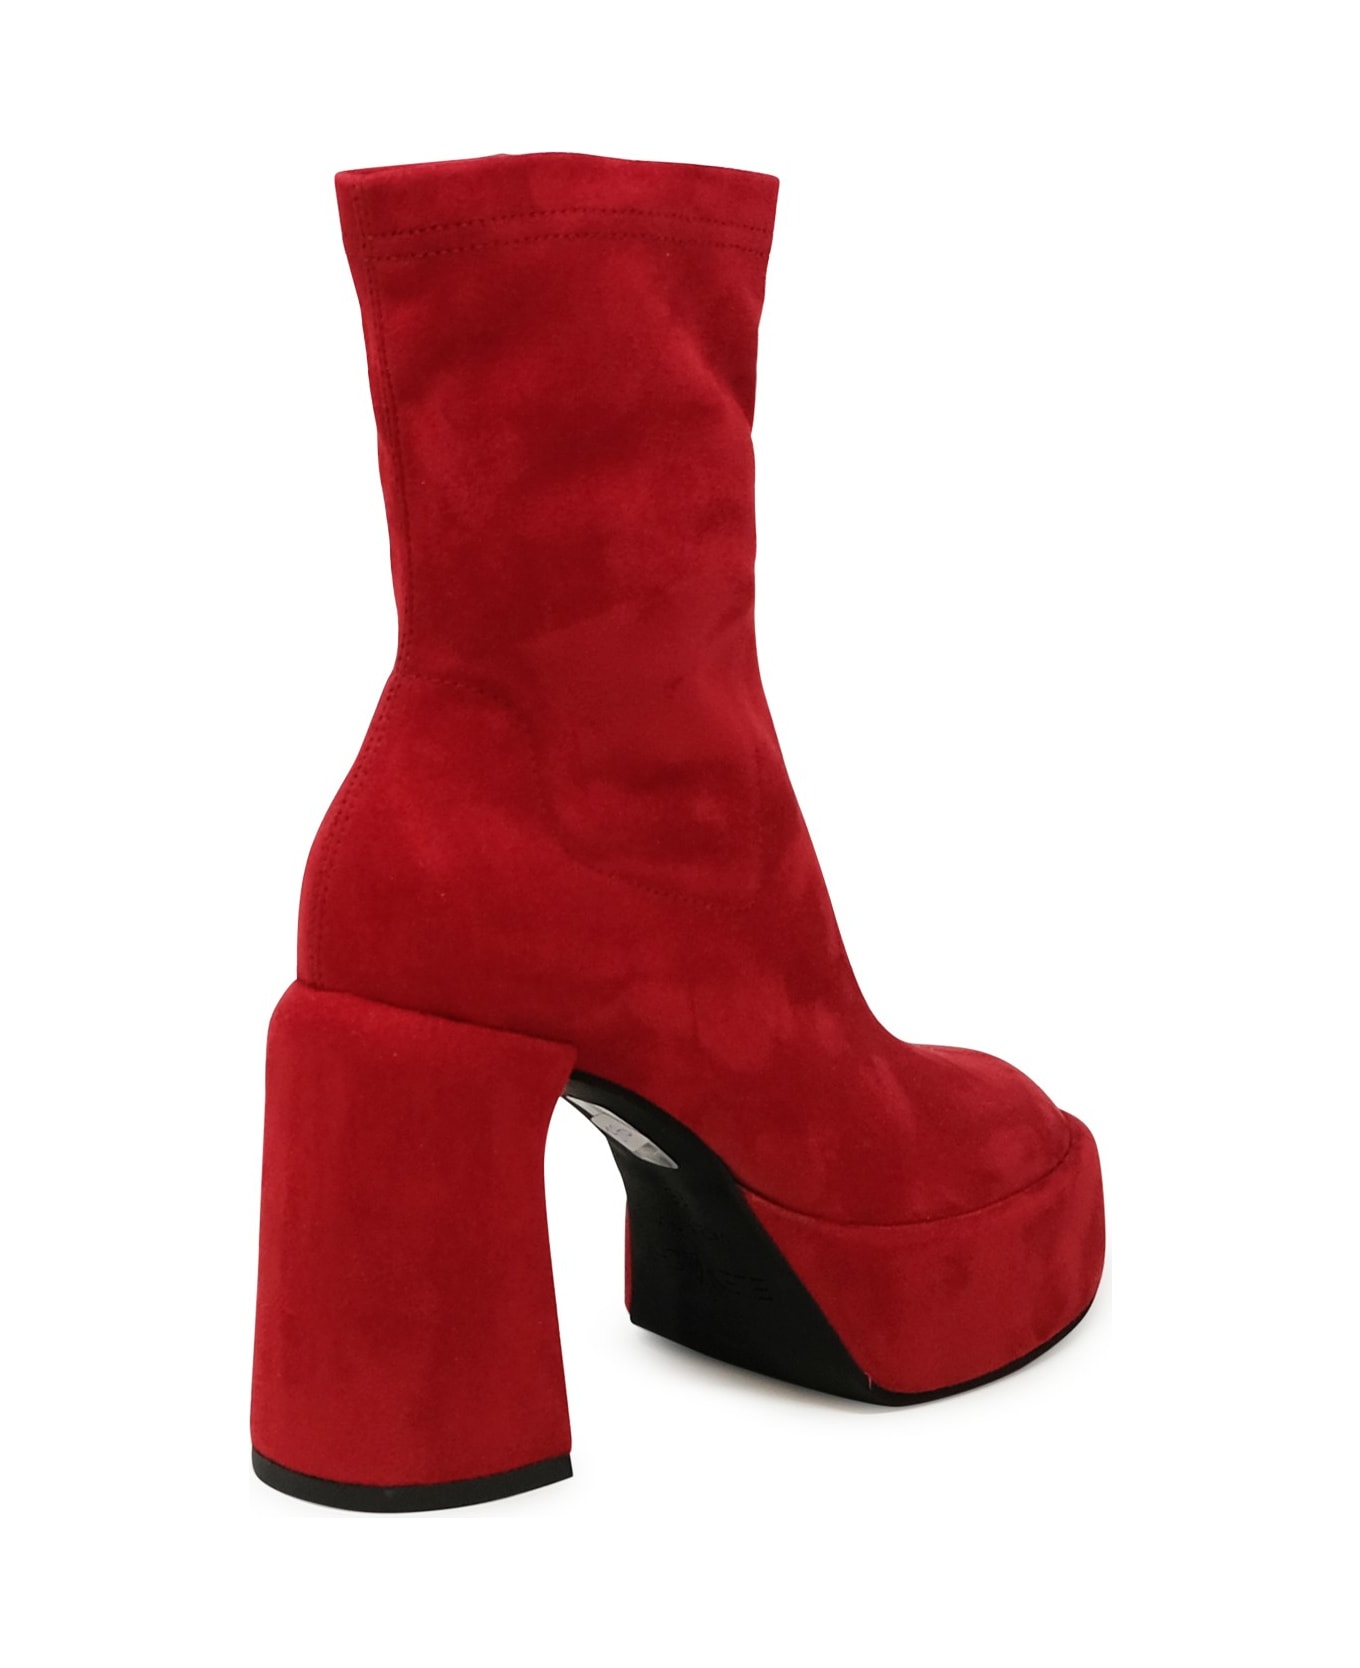 Elena Iachi Ecodaino Zelda Ankle Boots - RED